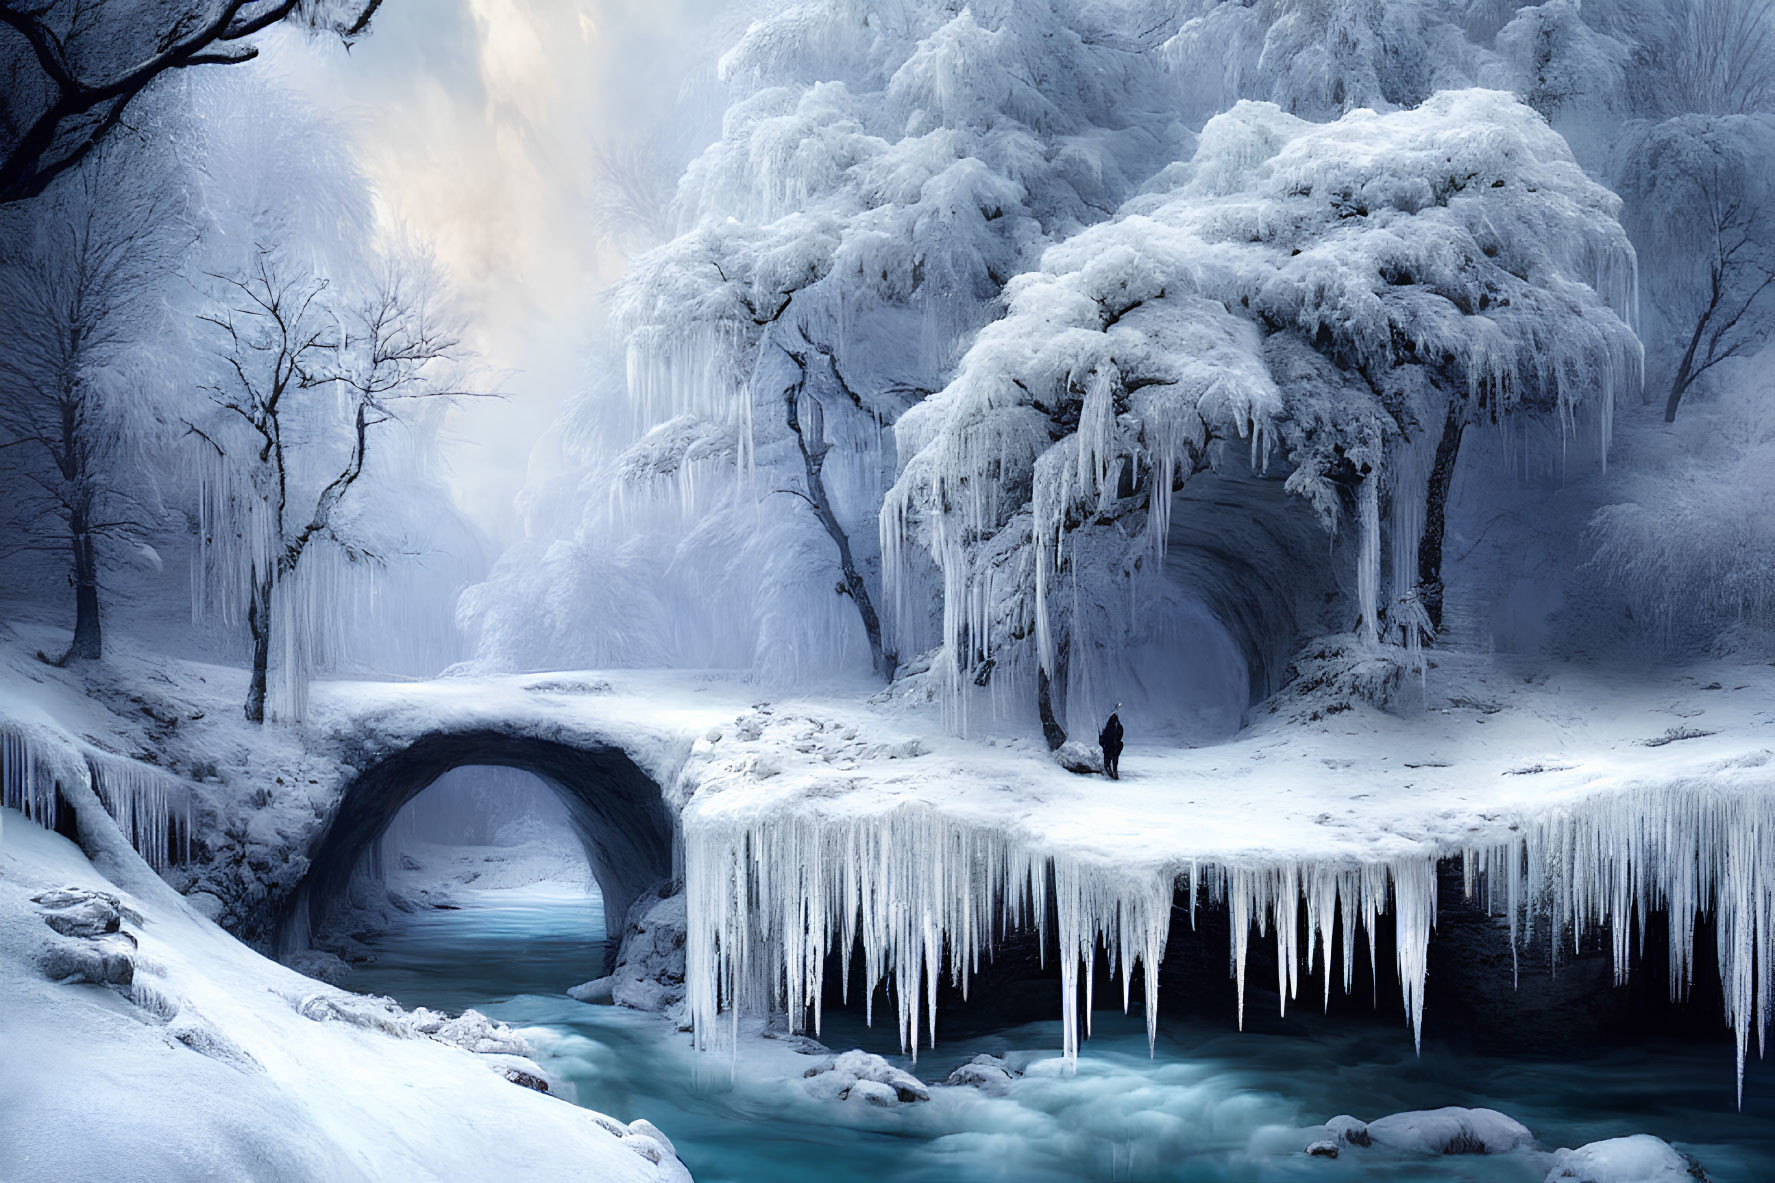 Snowy Winter Scene: Stone Bridge, Frozen River, Ice-Covered Trees